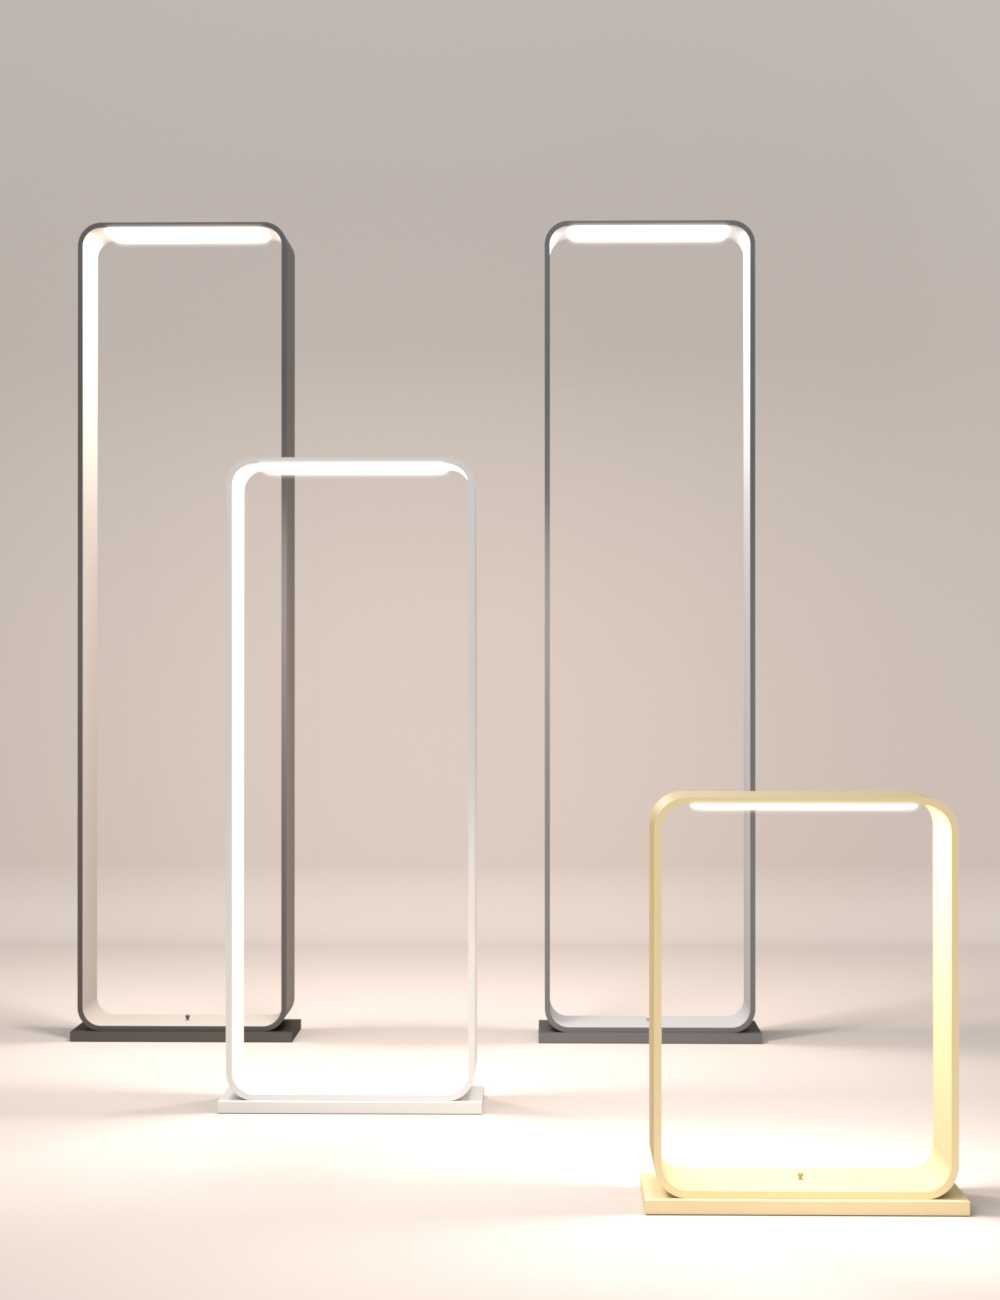 Lamp Light: Floor Lamps for Daz Studio by: Khory, 3D Models by Daz 3D